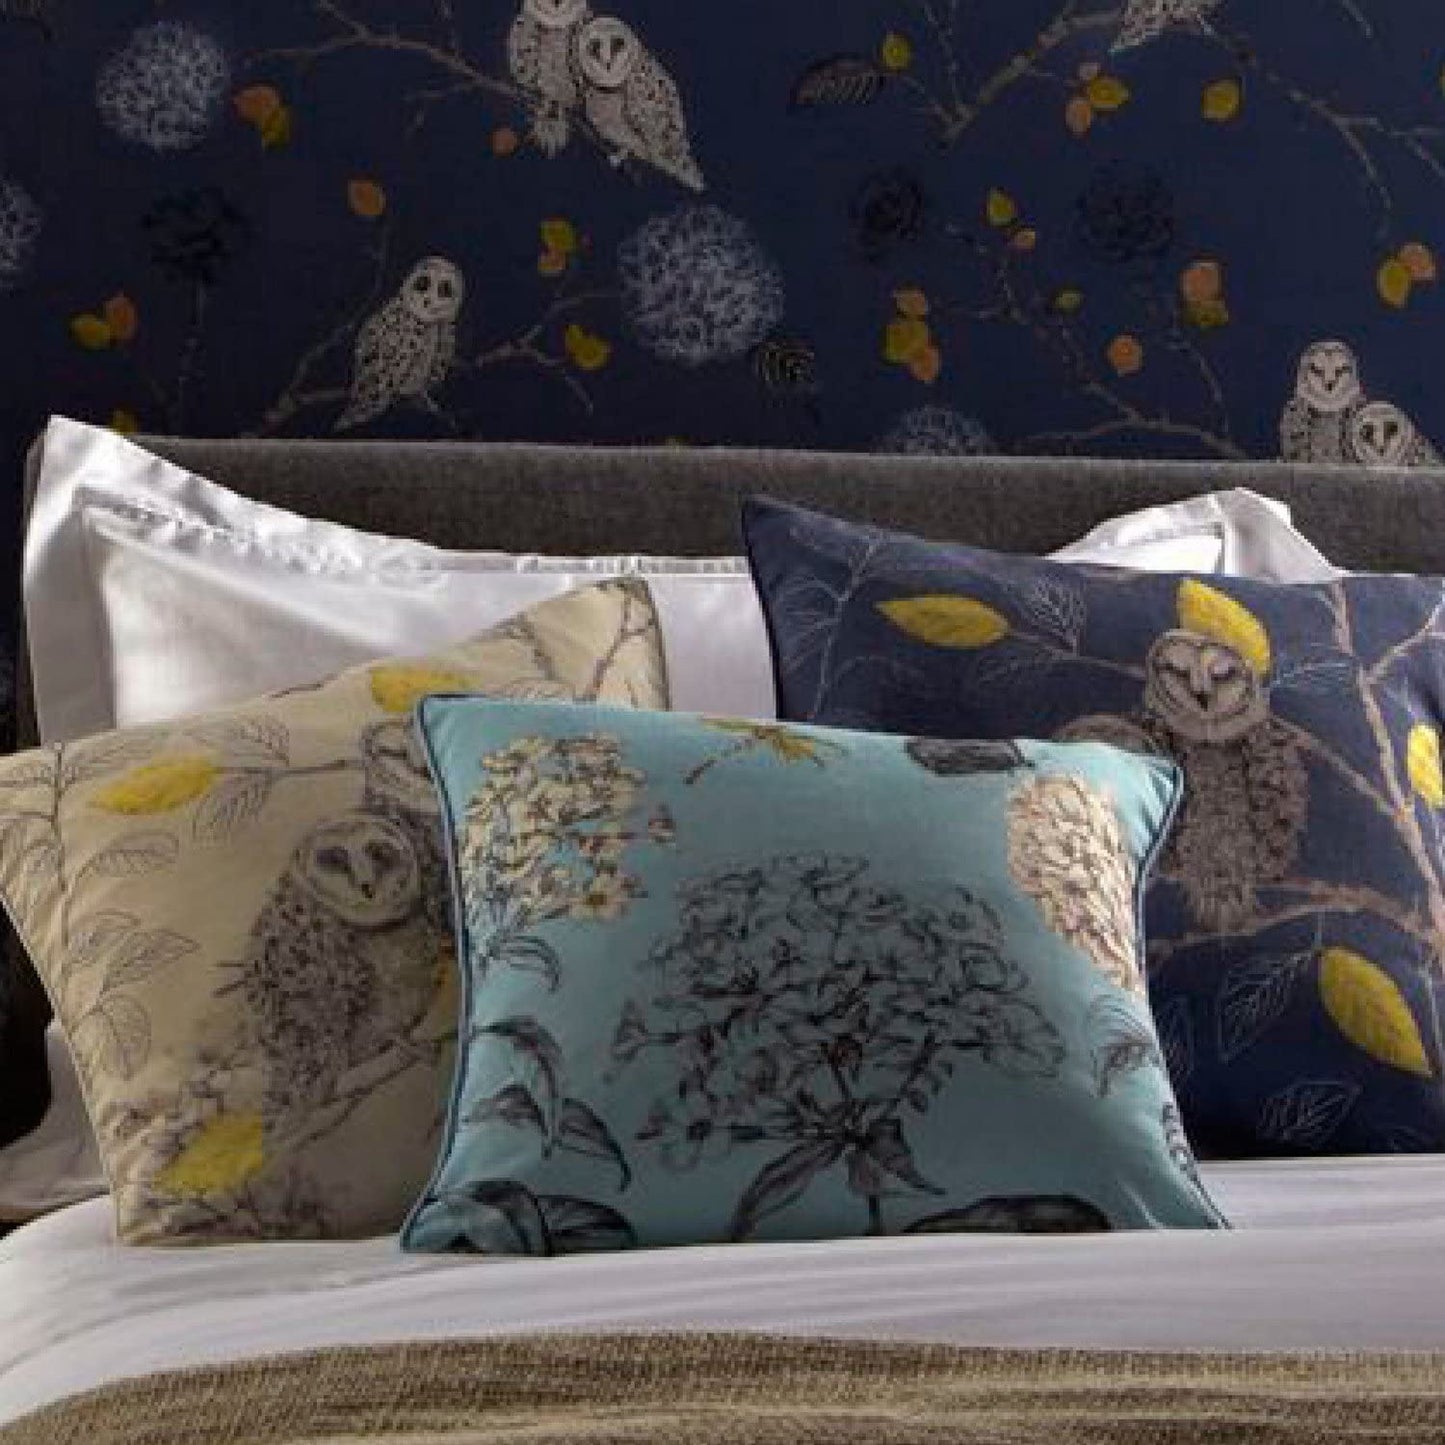 Night Owl Blue Cushion by Arthouse